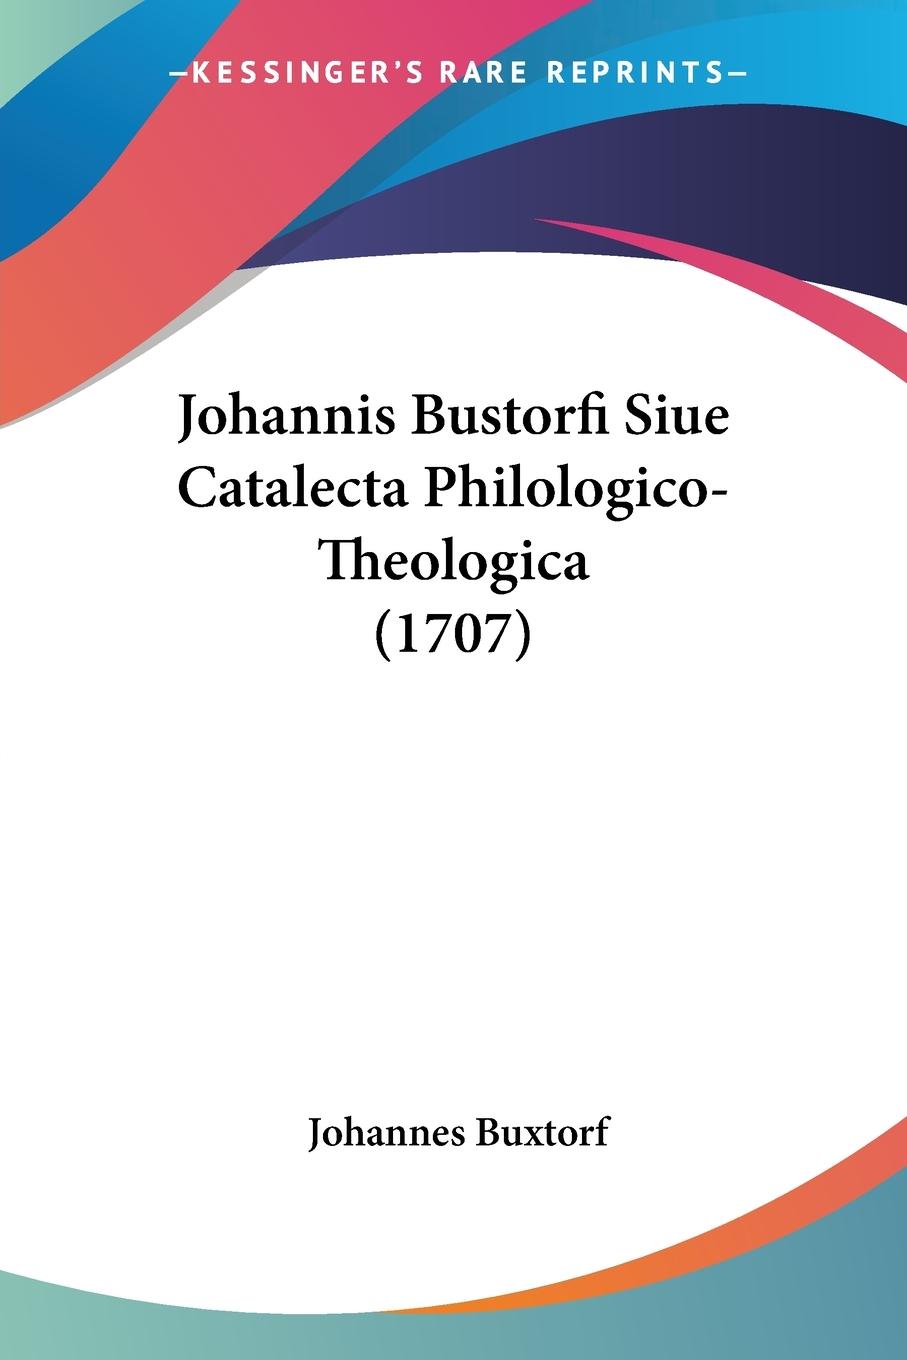 Johannis Bustorfi Siue Catalecta Philologico-Theologica (1707) - Buxtorf, Johannes